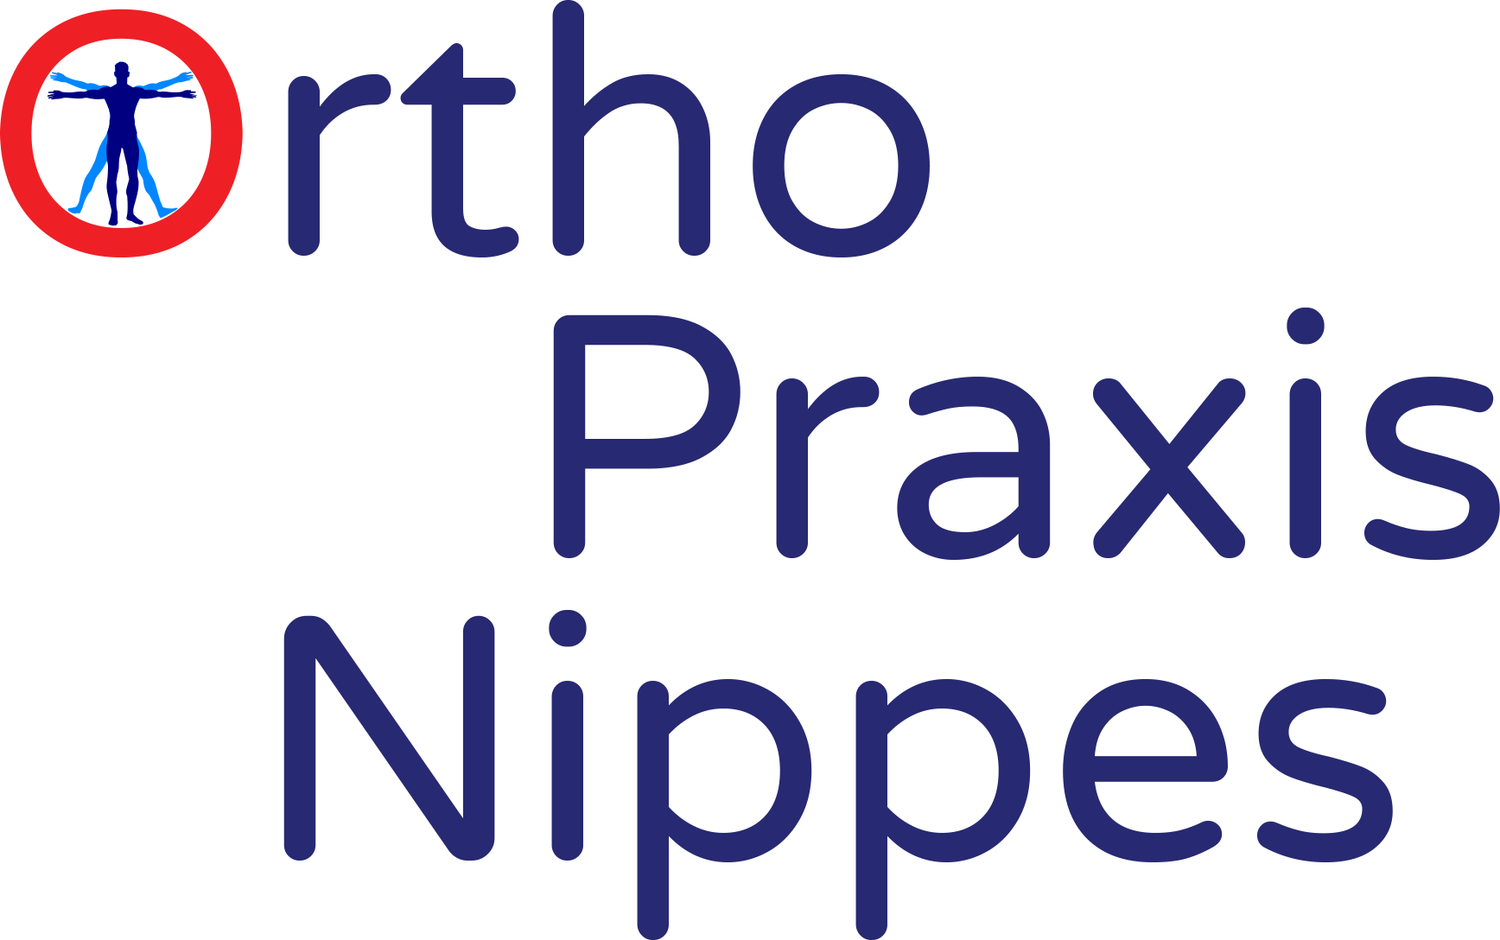 Ortho Praxis Nippes